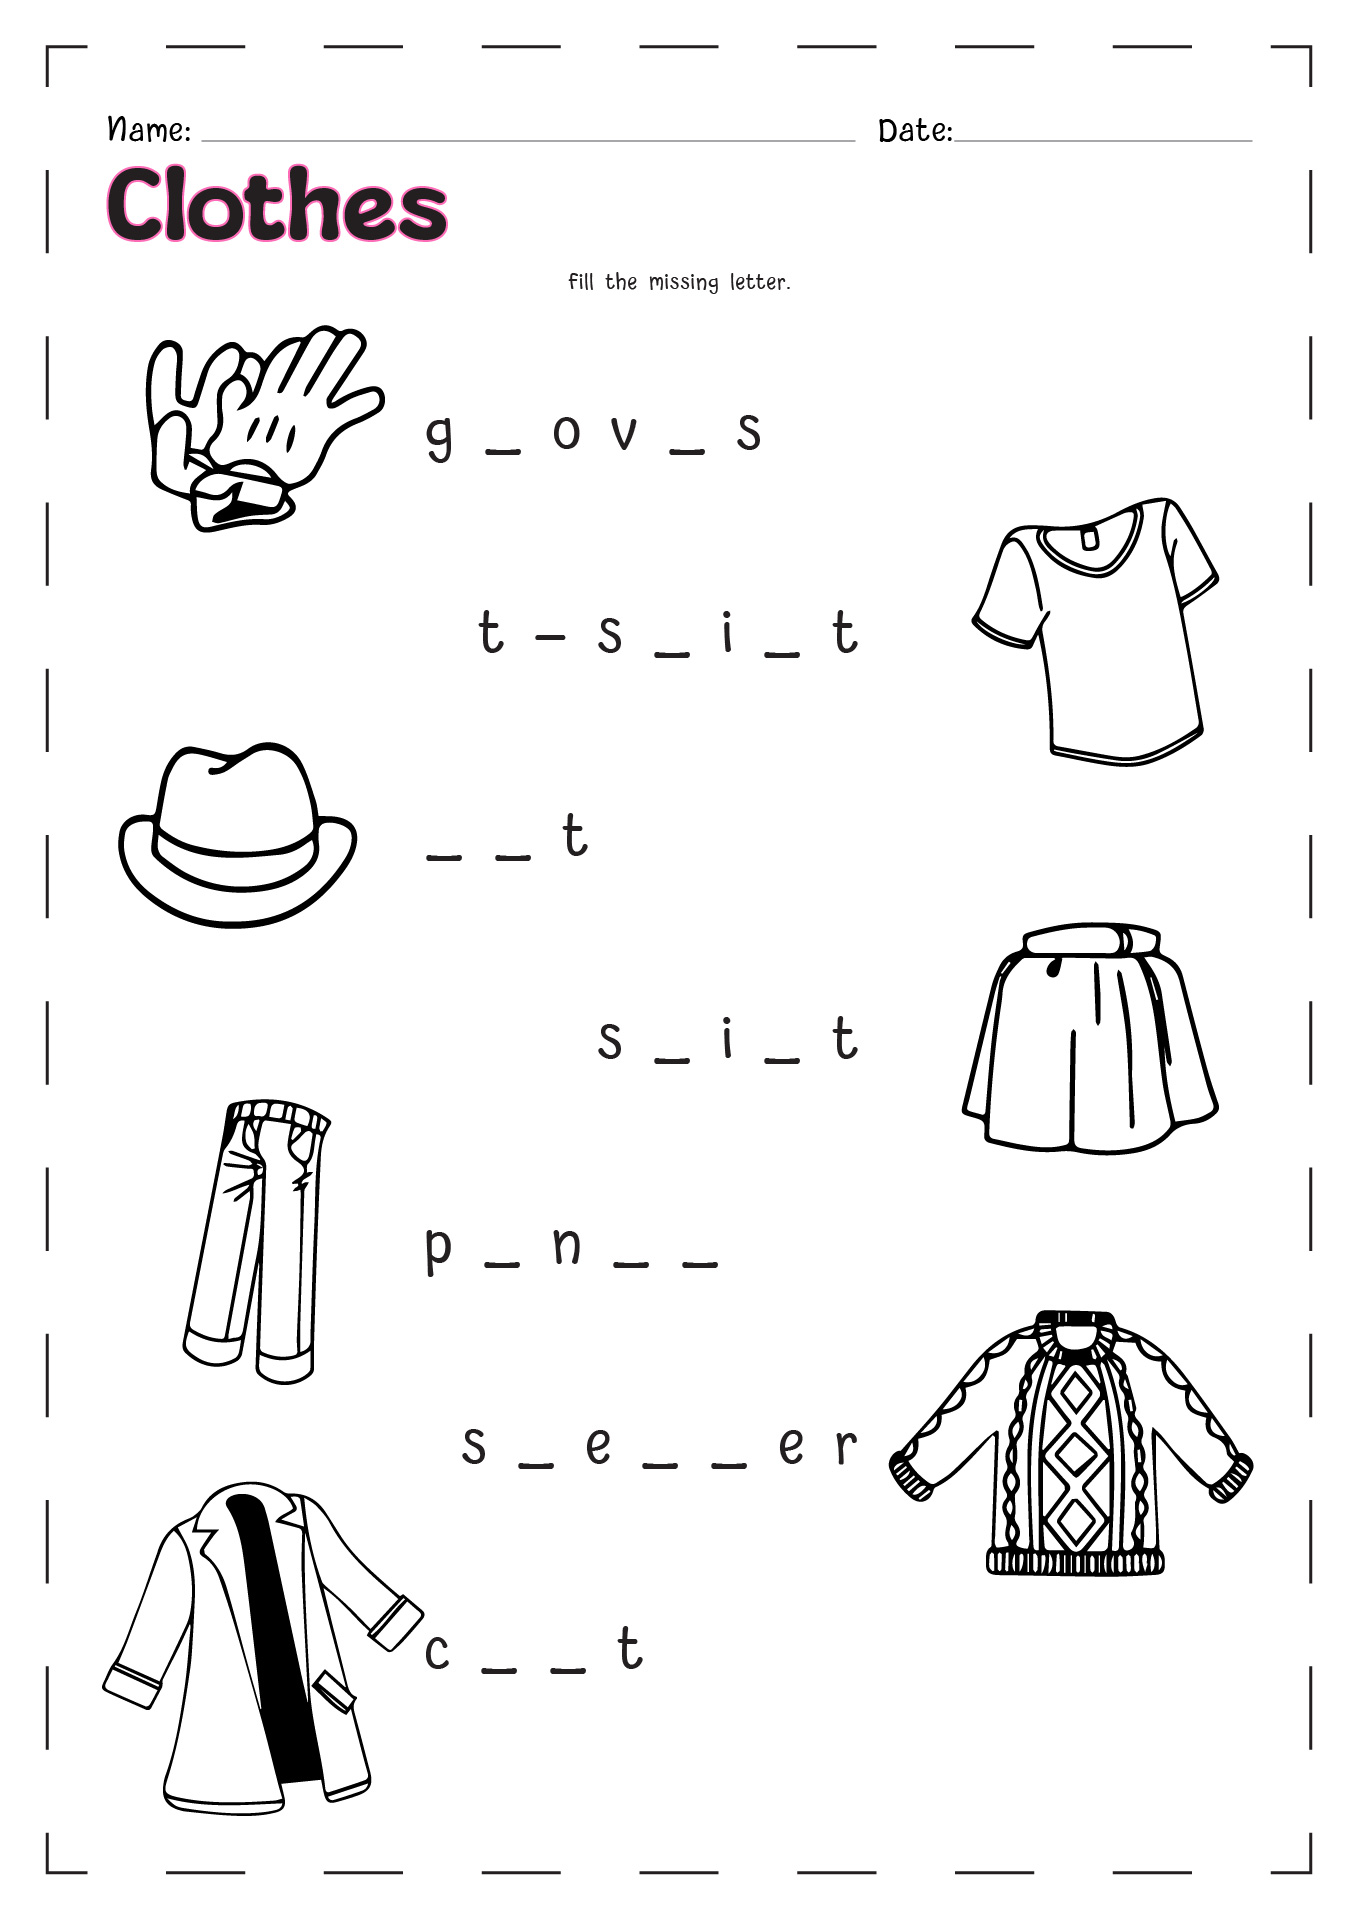 15 Clothes Worksheet Kids - Free PDF at worksheeto.com